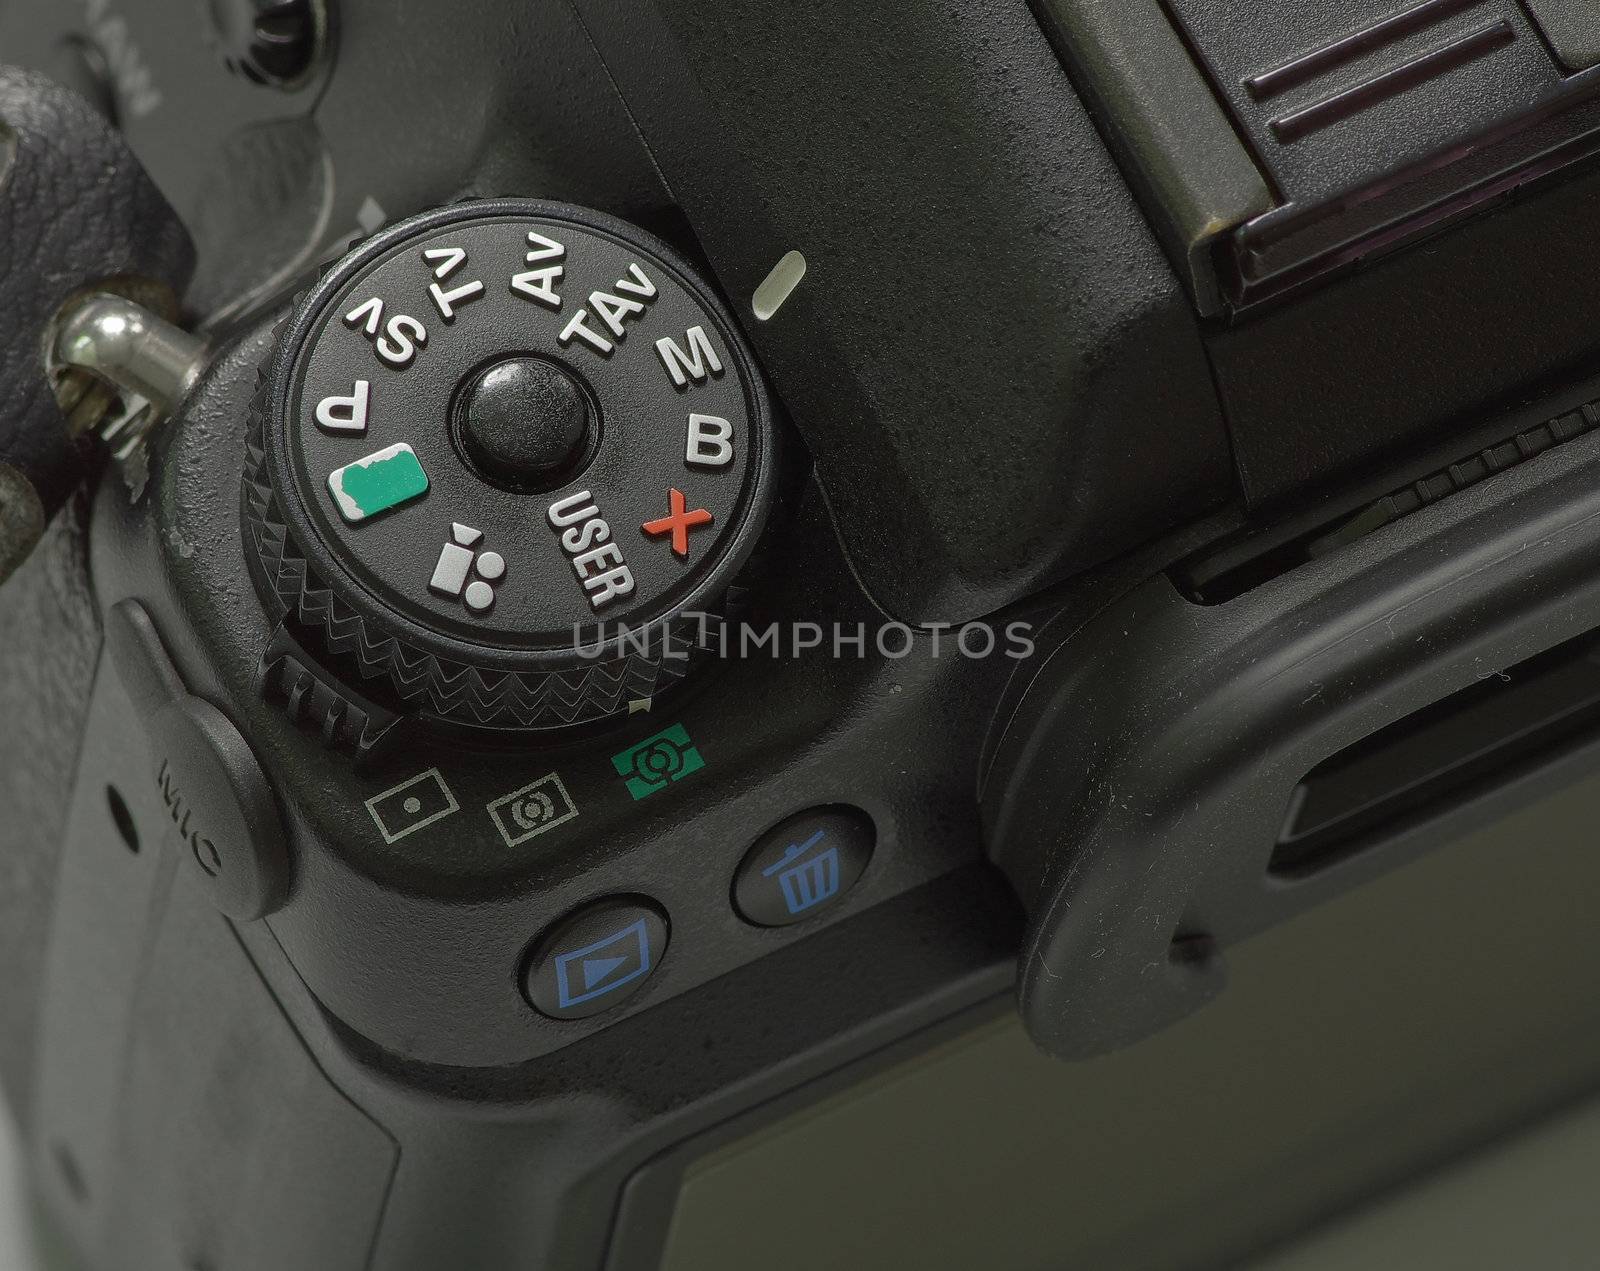 manual mode in camera mode dial by BeeManGuitarRa